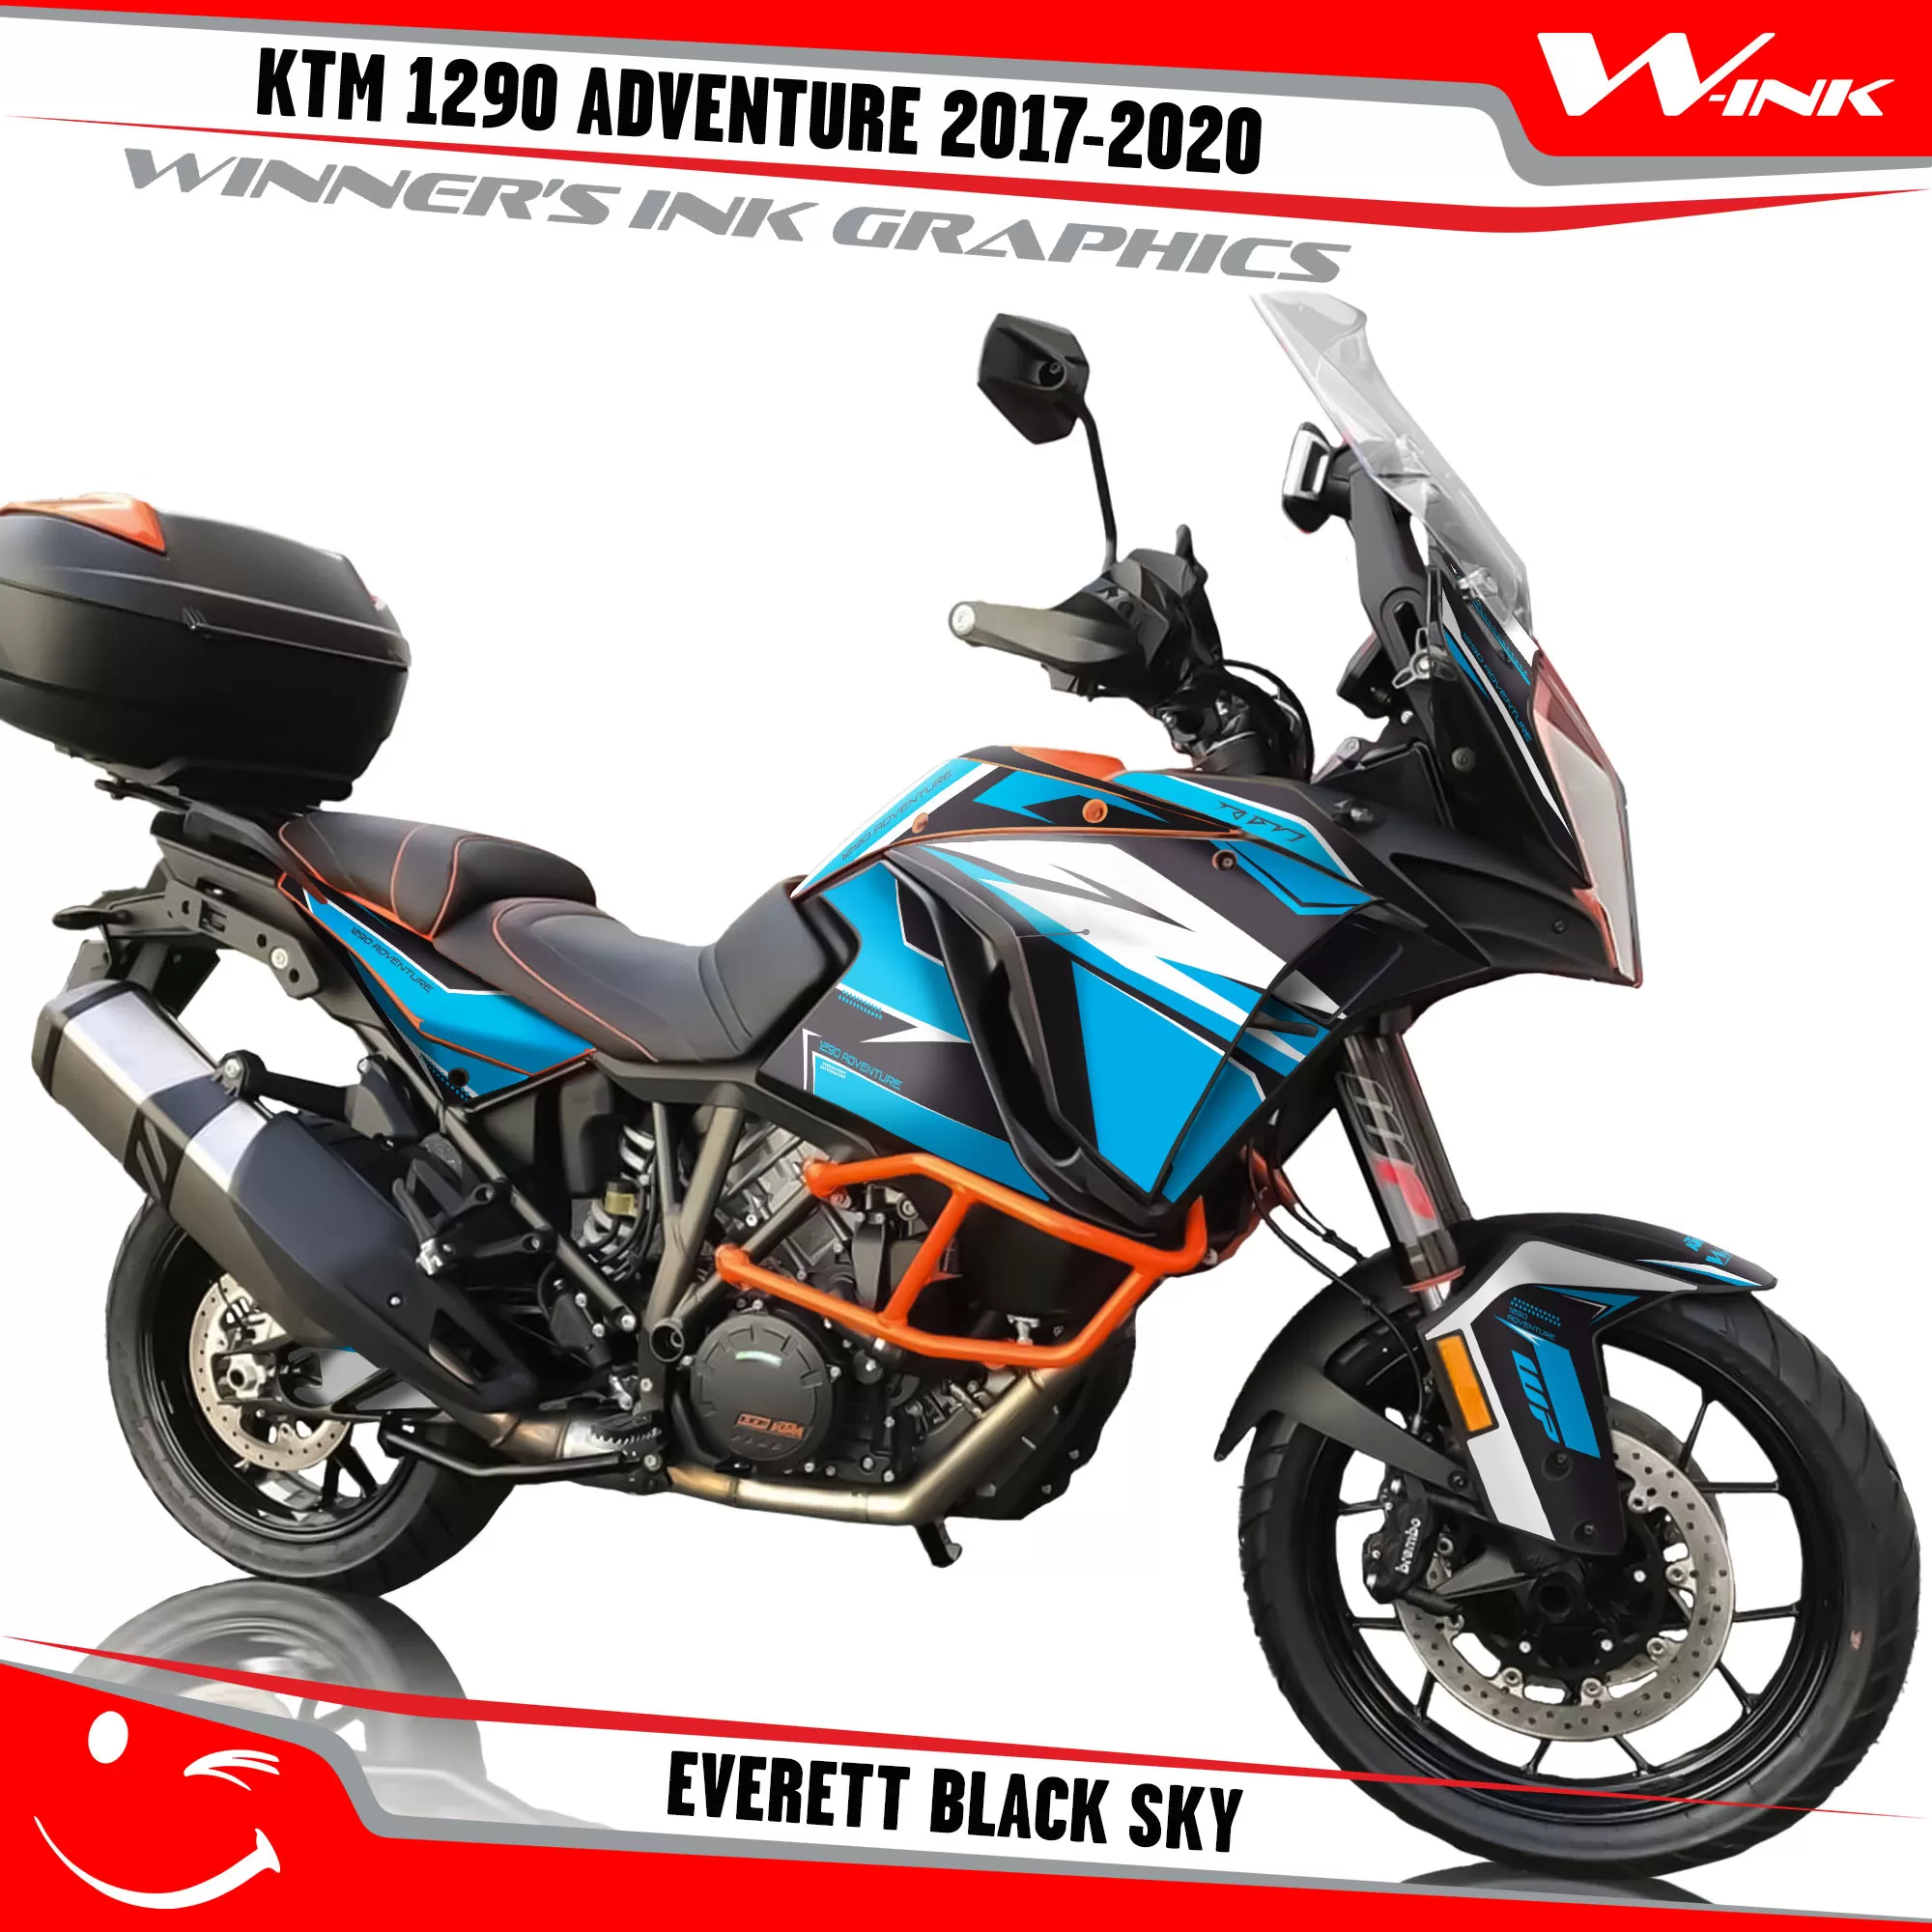 KTM-Adventure-1290-2017-2018-2019-2020-graphics-kit-and-decals-Everett-Black-Sky